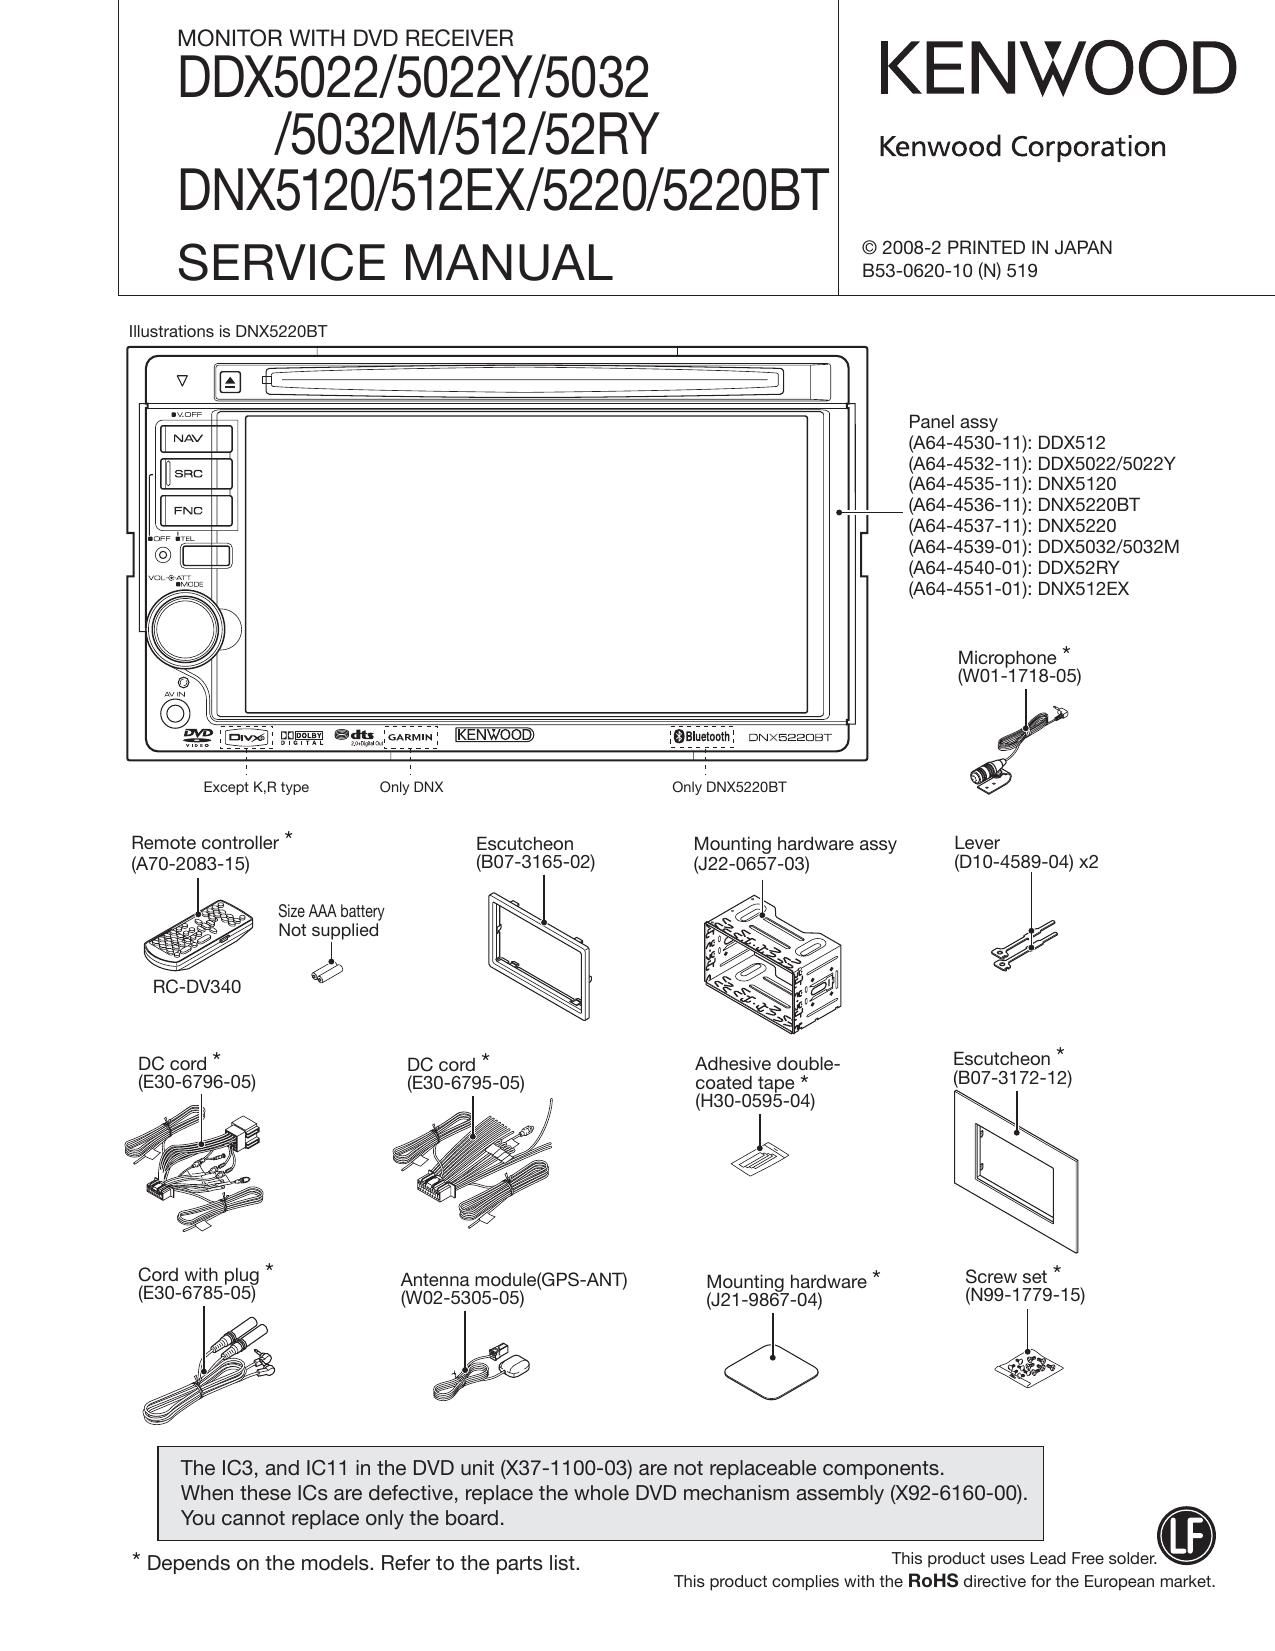 Kenwood DDX 512 HU Service Manual